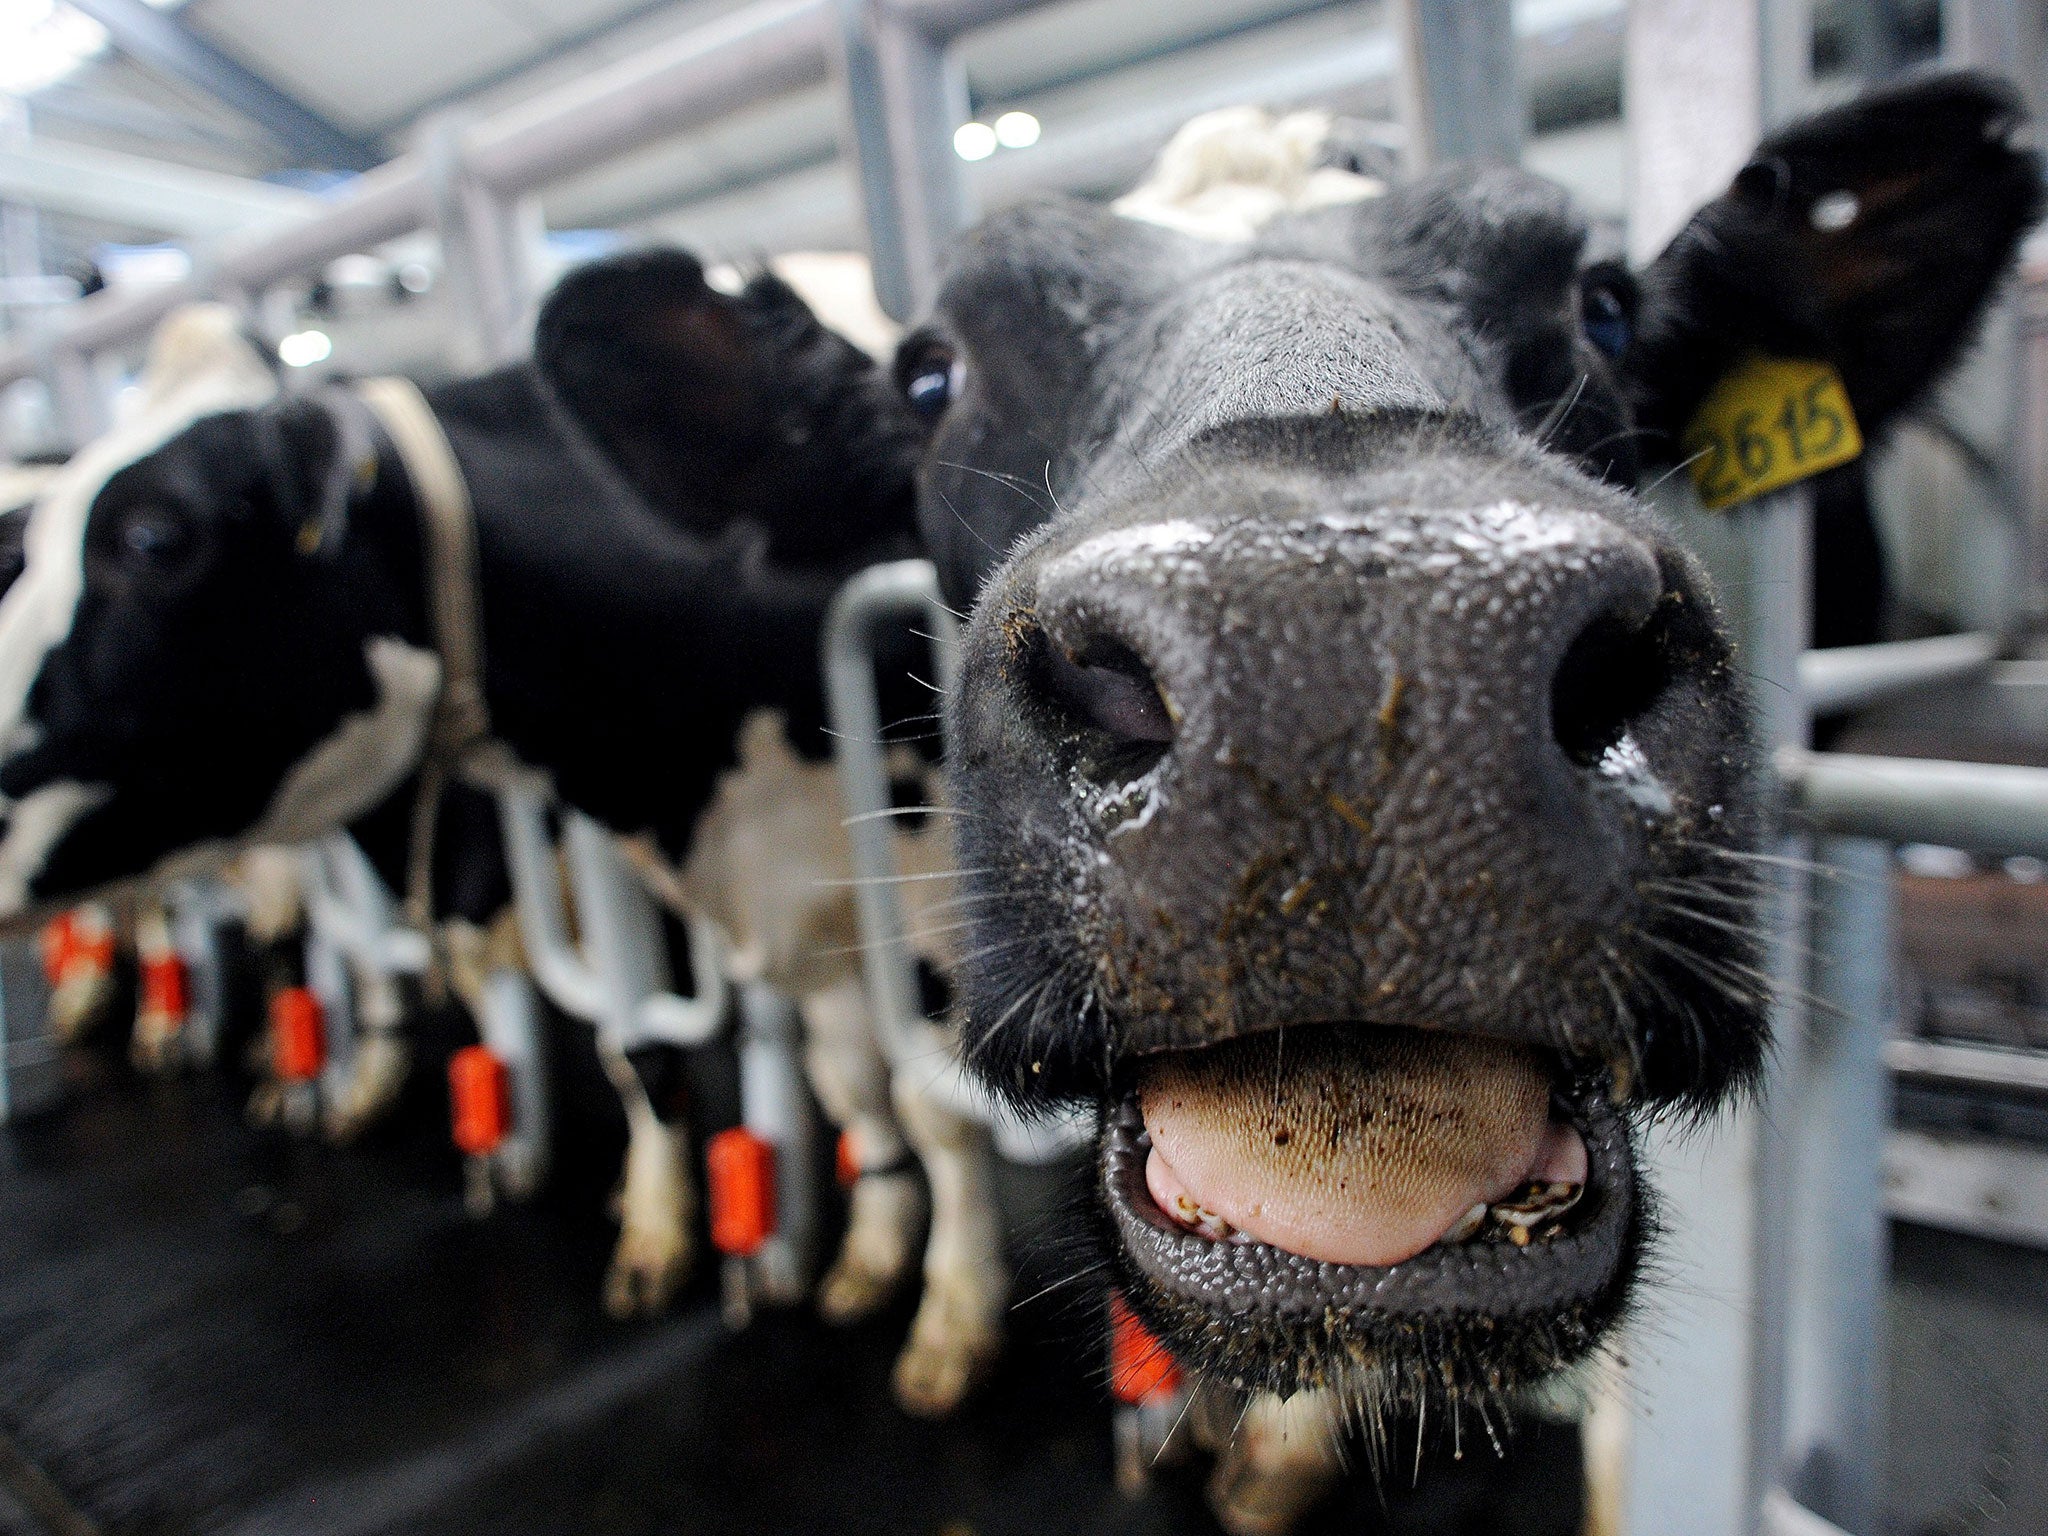 Cows at an industrial dairy farm